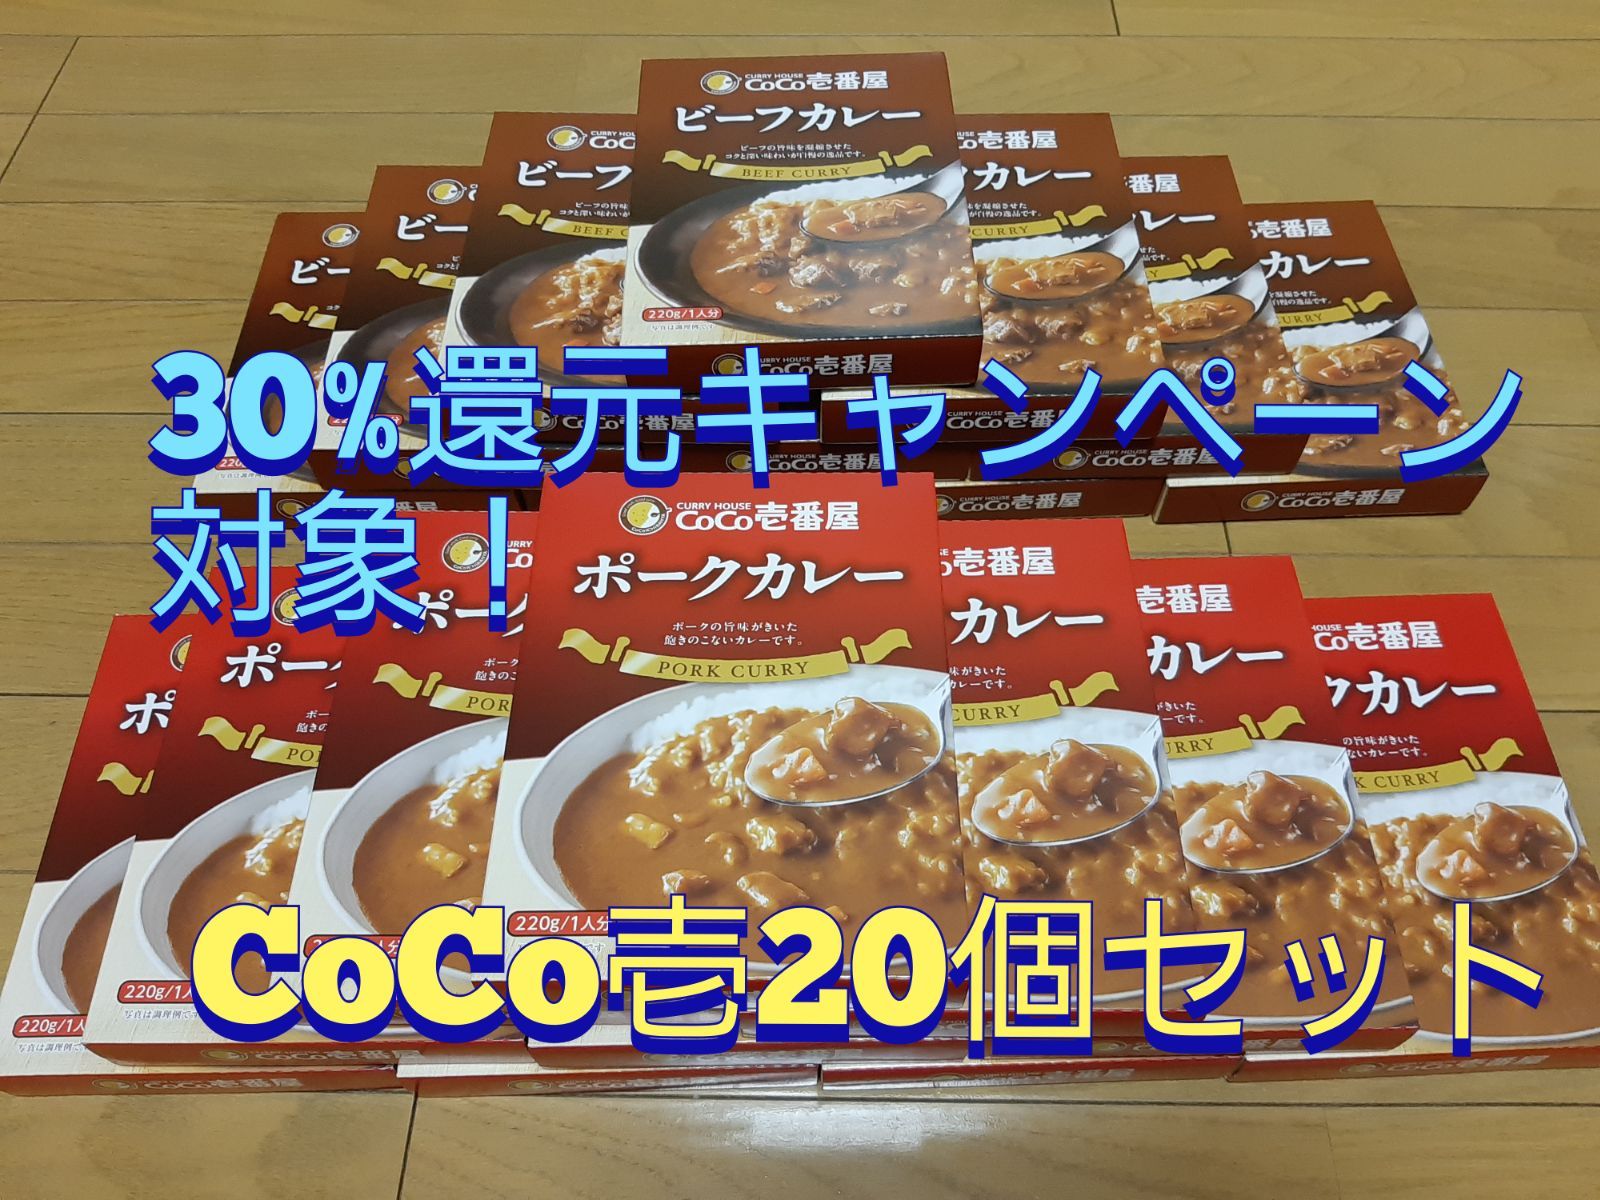 CoCo壱番屋 レトルトビーフカレー - 加工食品